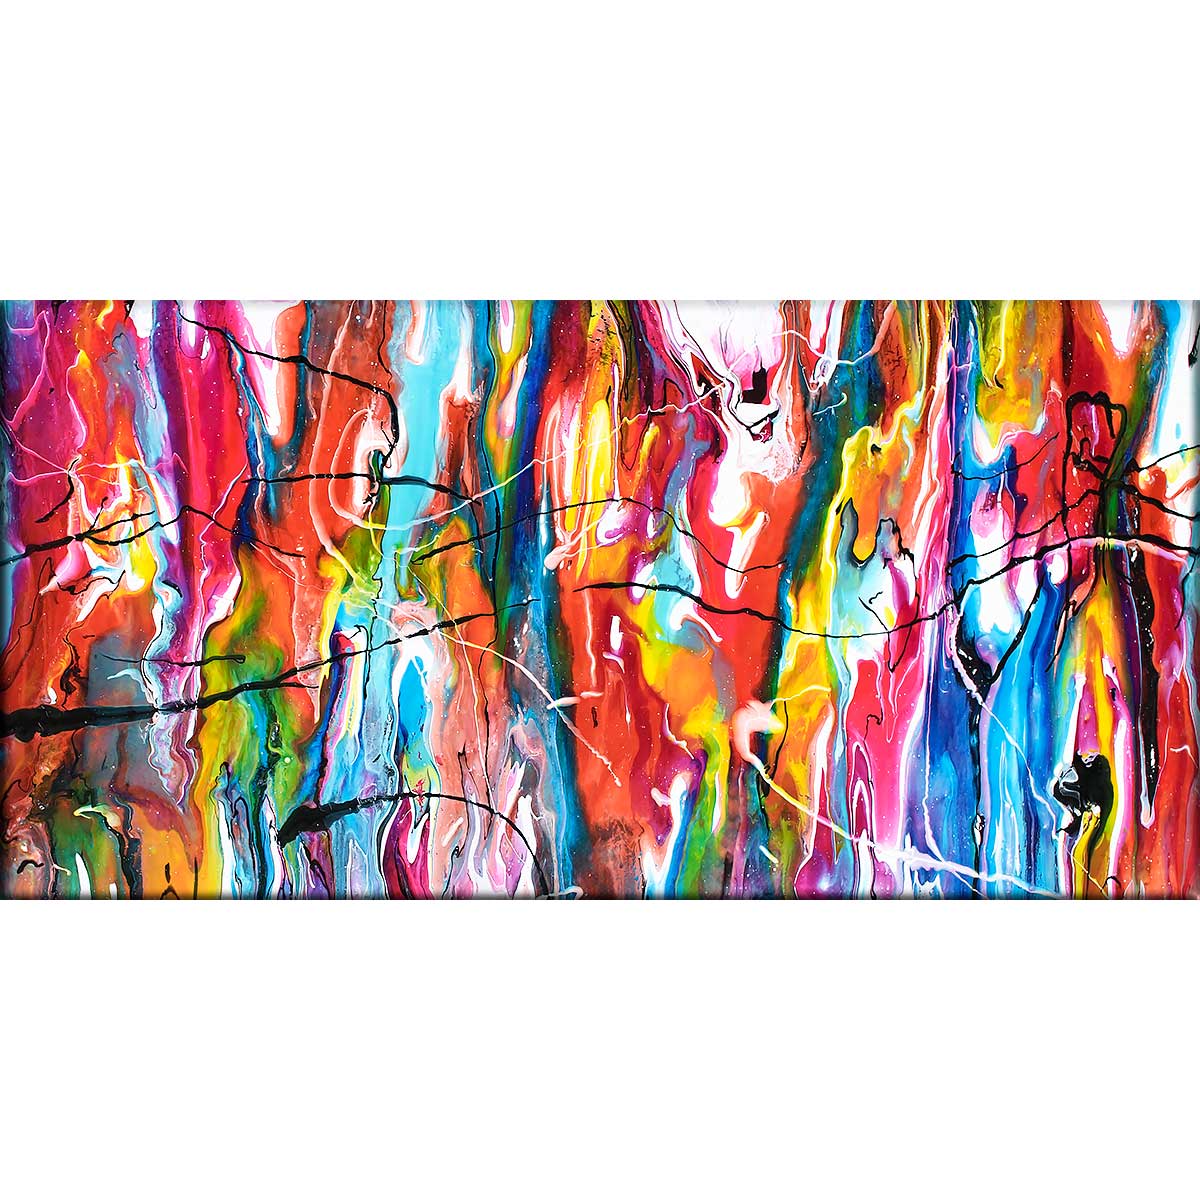 Leinwandbild mit bunten Farben Heroic III 70x140 cm